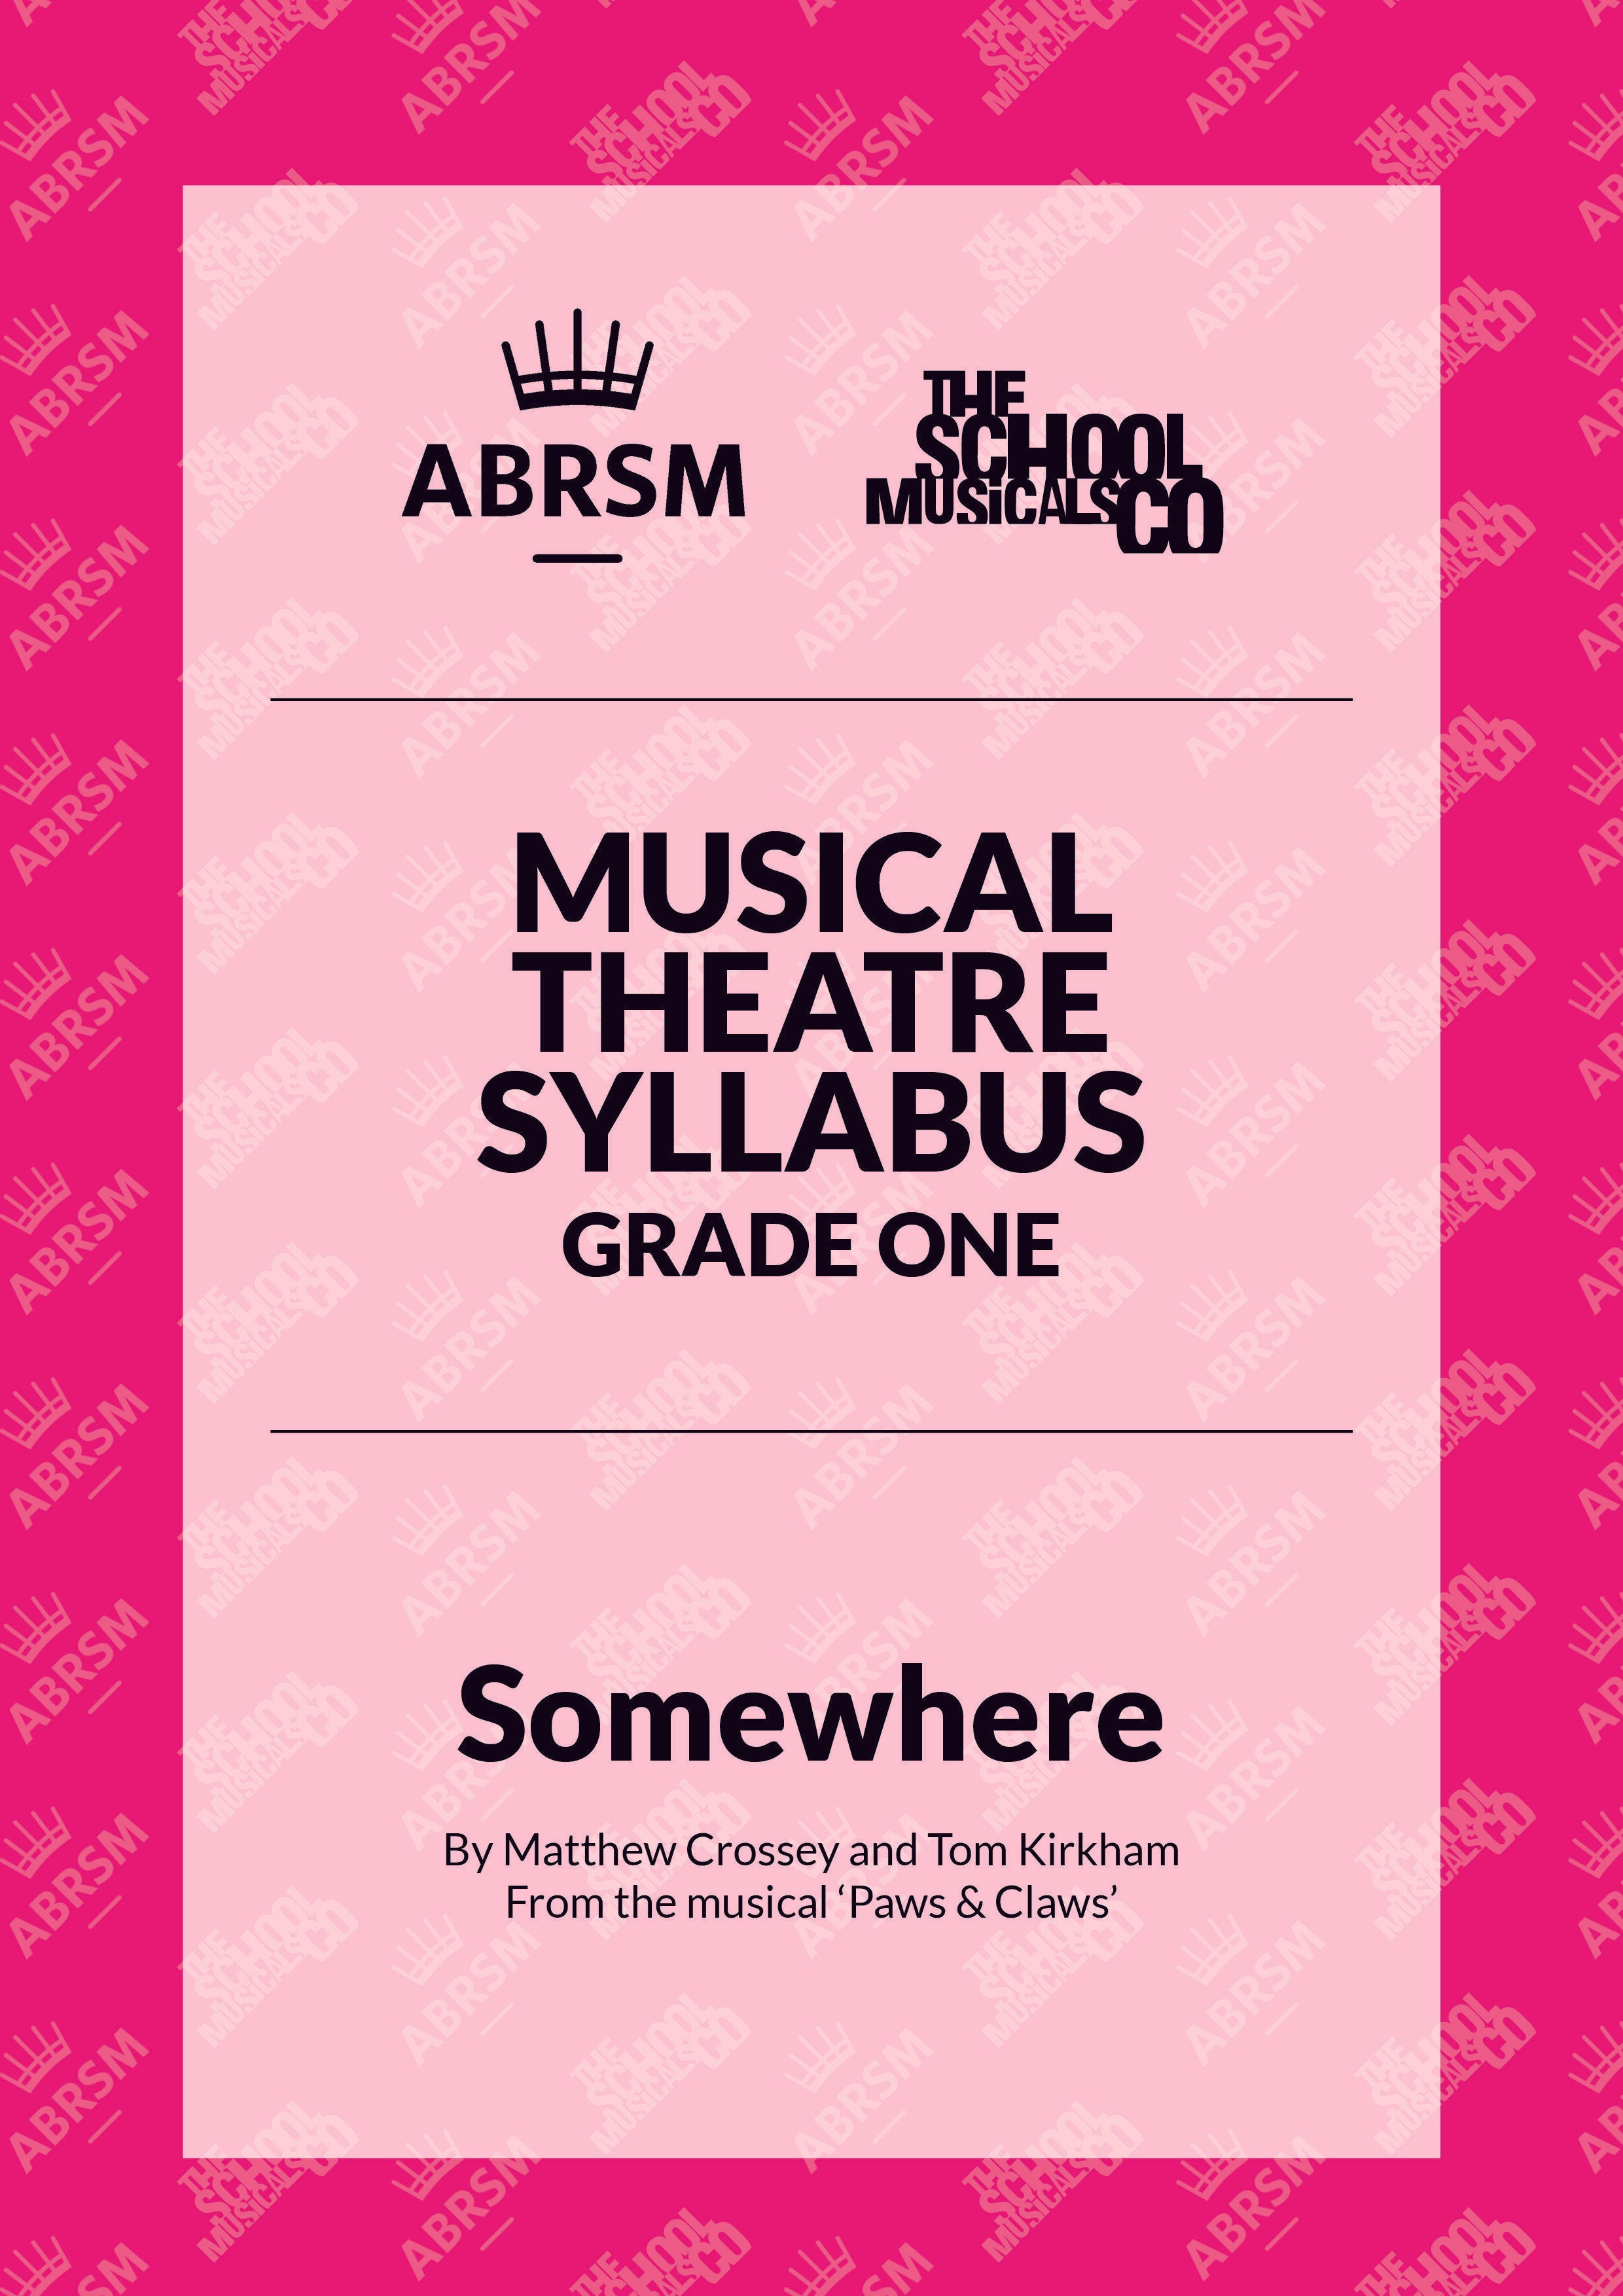 Somewhere - ABRSM Musical Theatre Syllabus Grade One